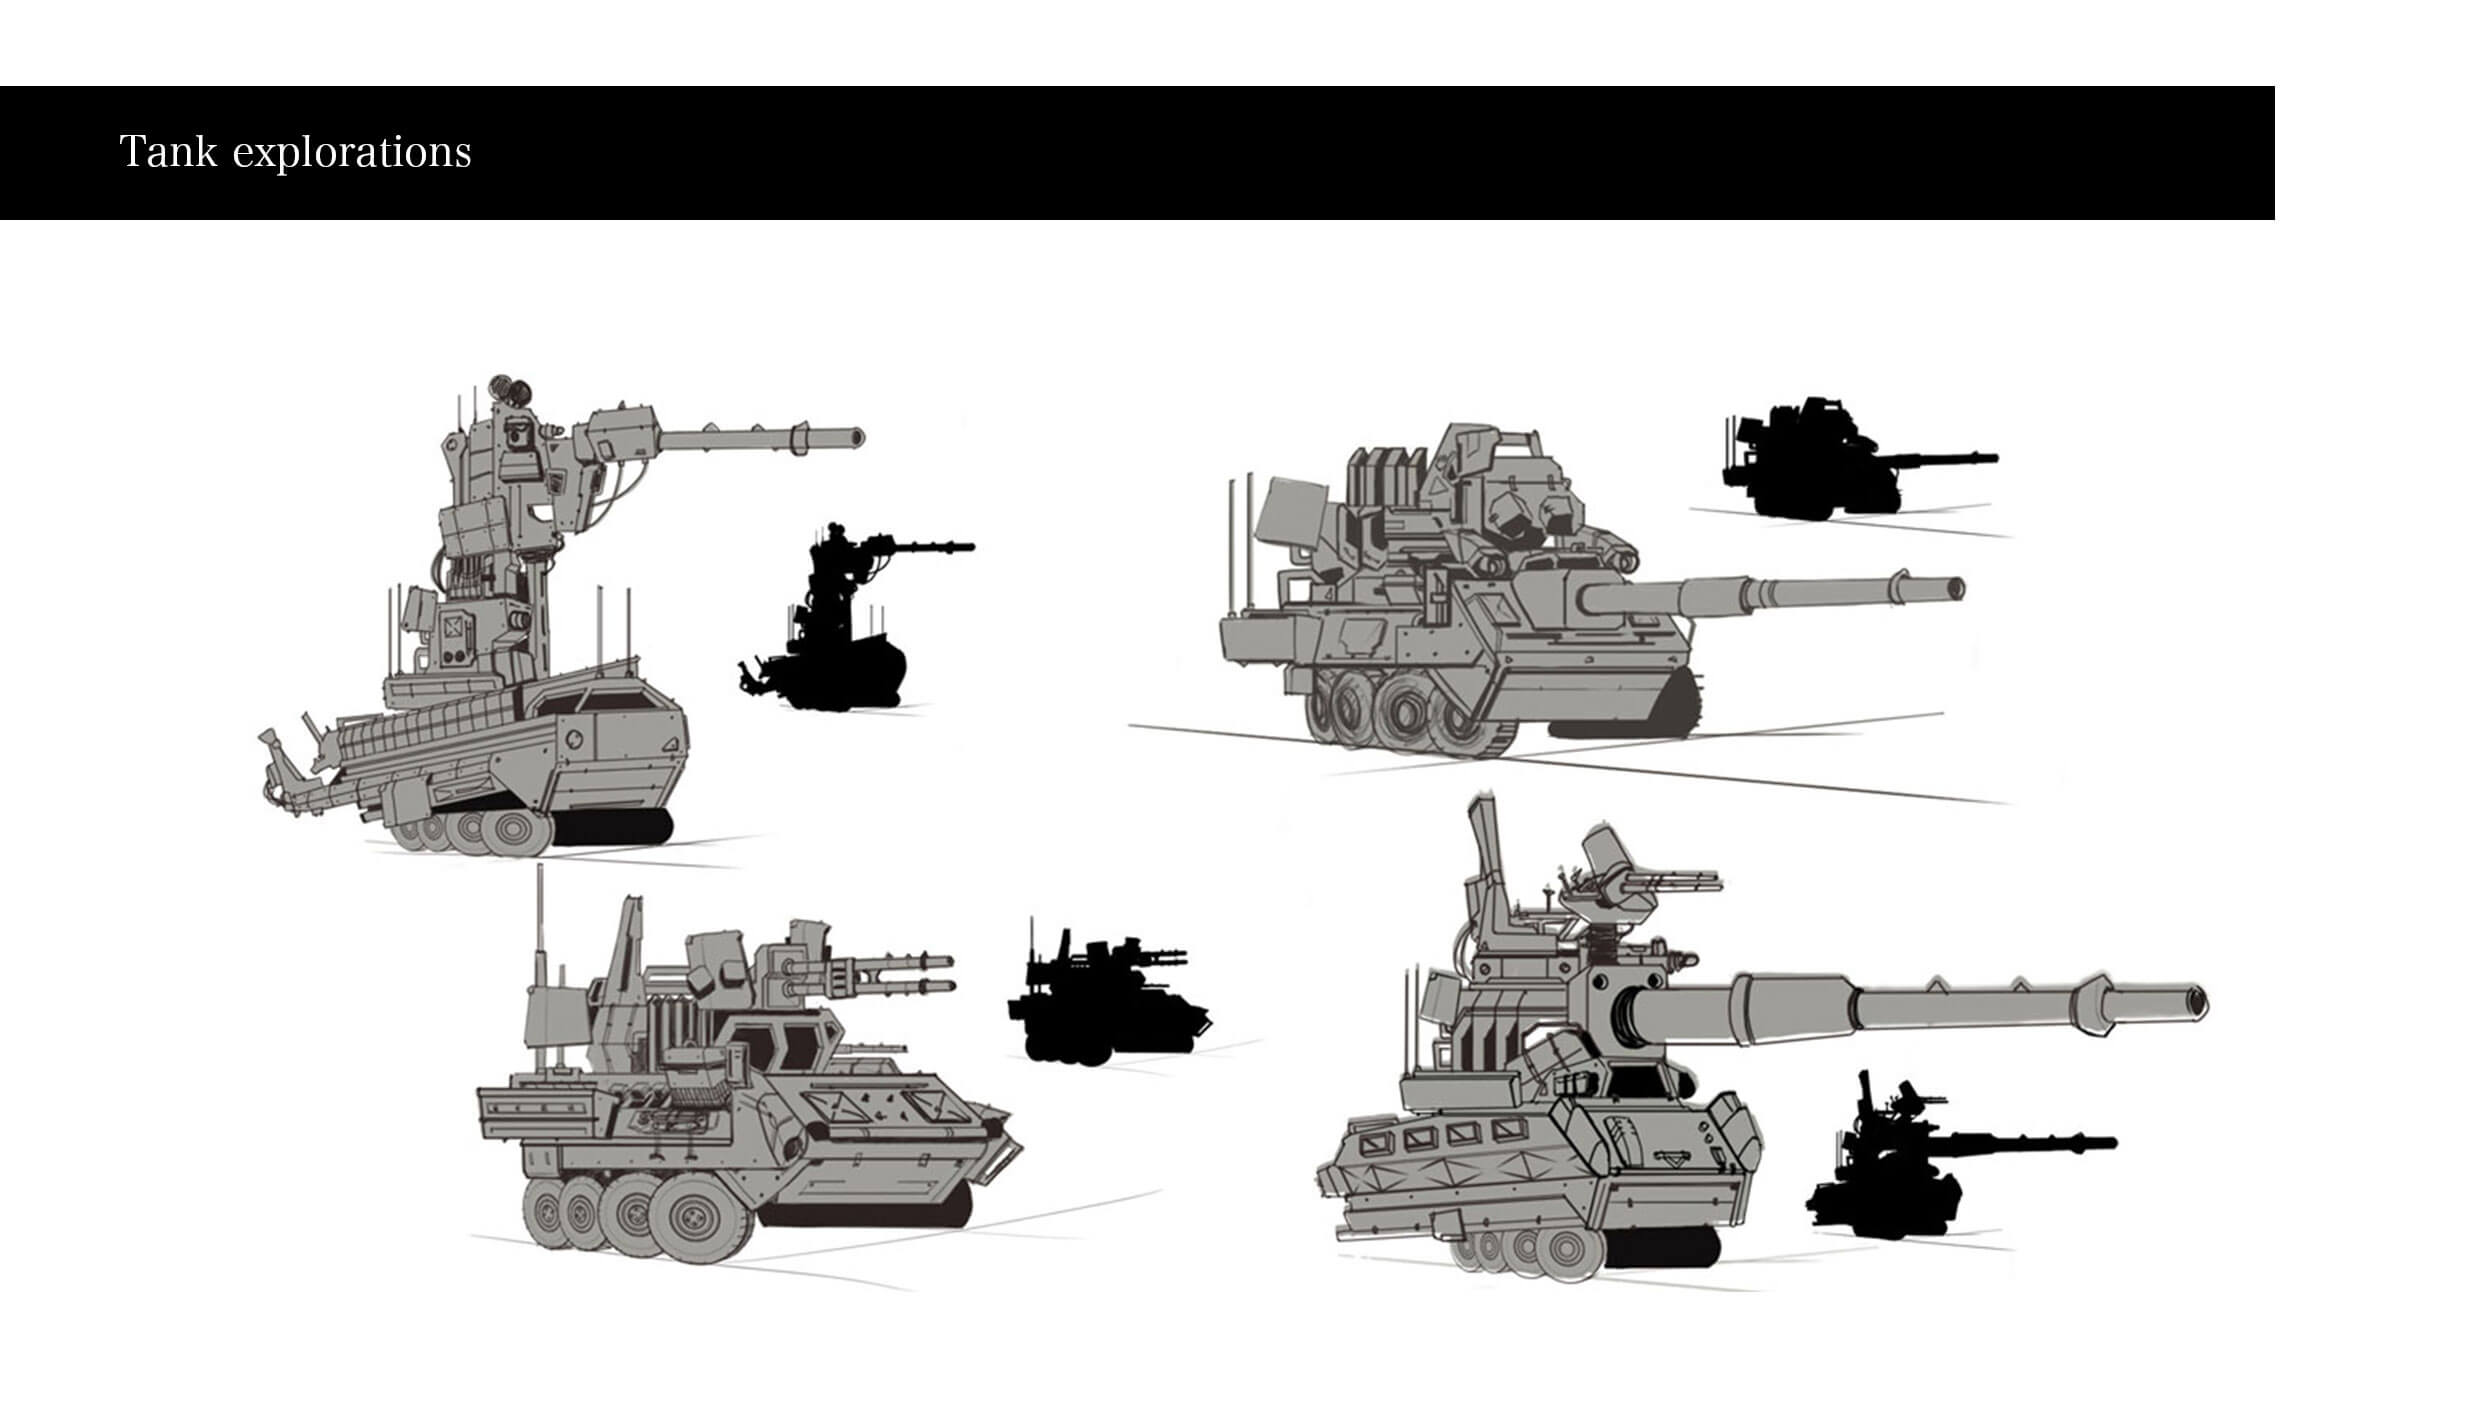 Tank concept design